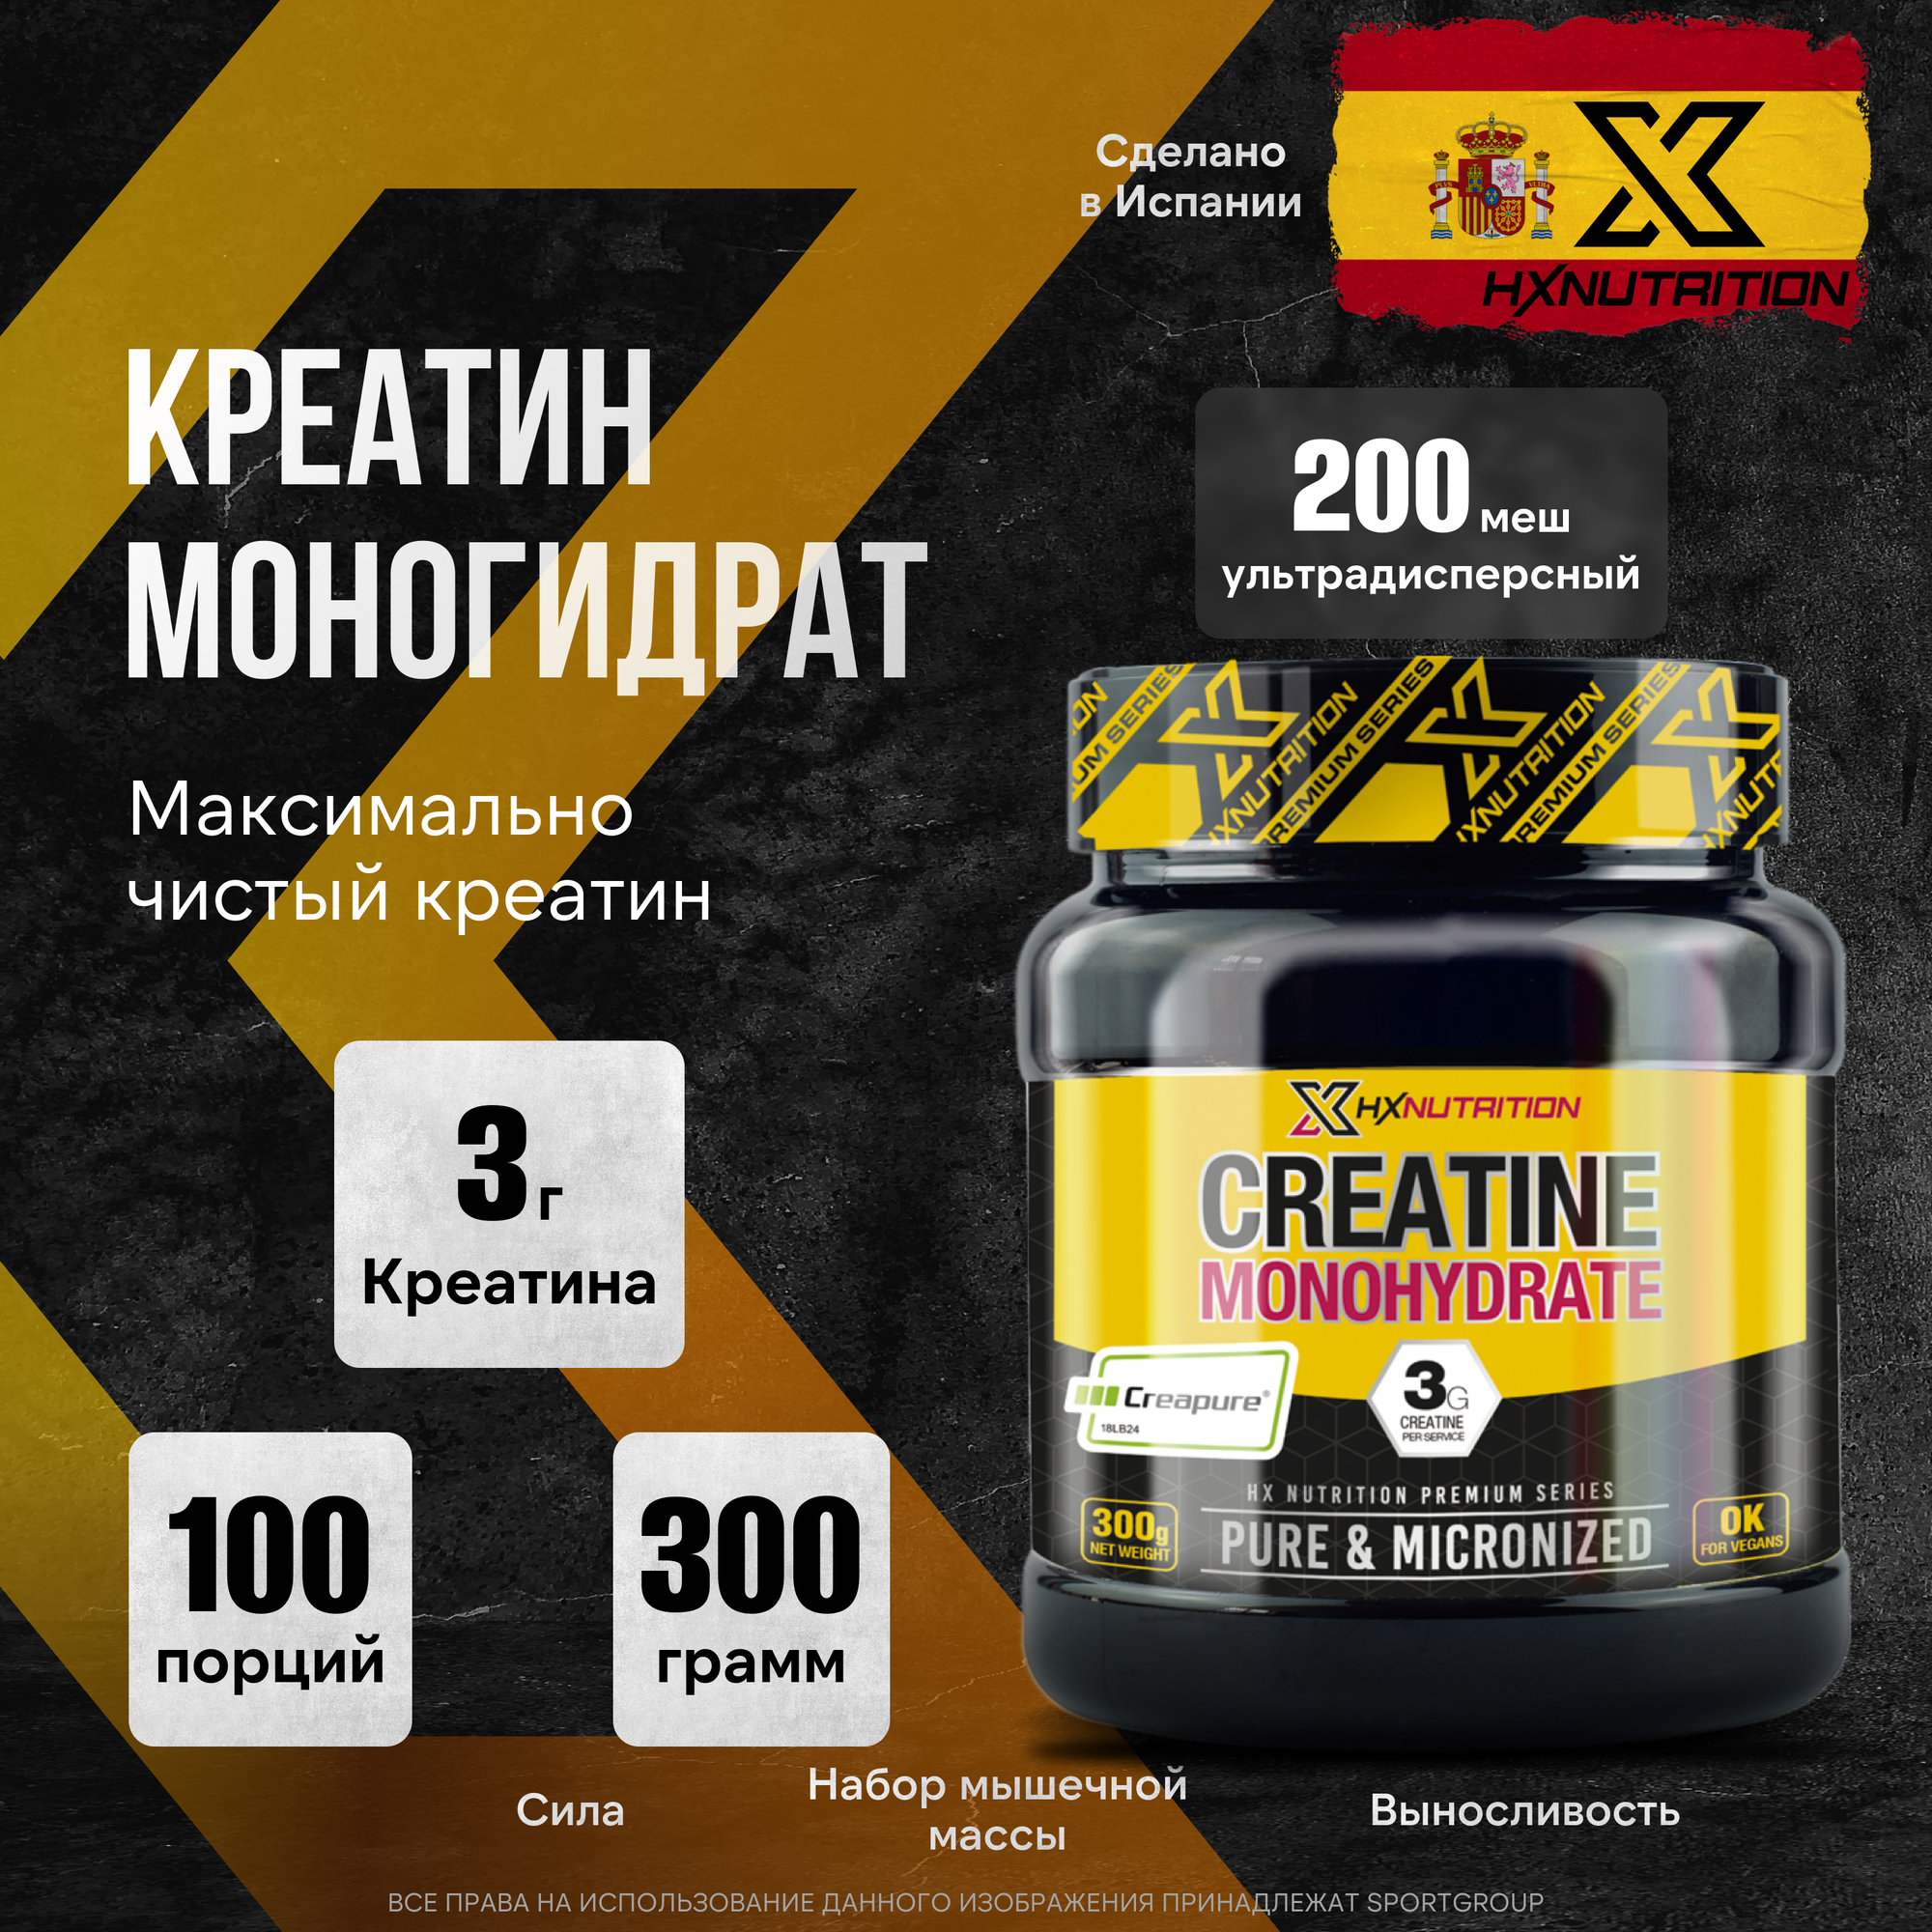 Креатин моногидрат HX Nutrition Premium Creatine Monohydrate (300 г) Нейтральный